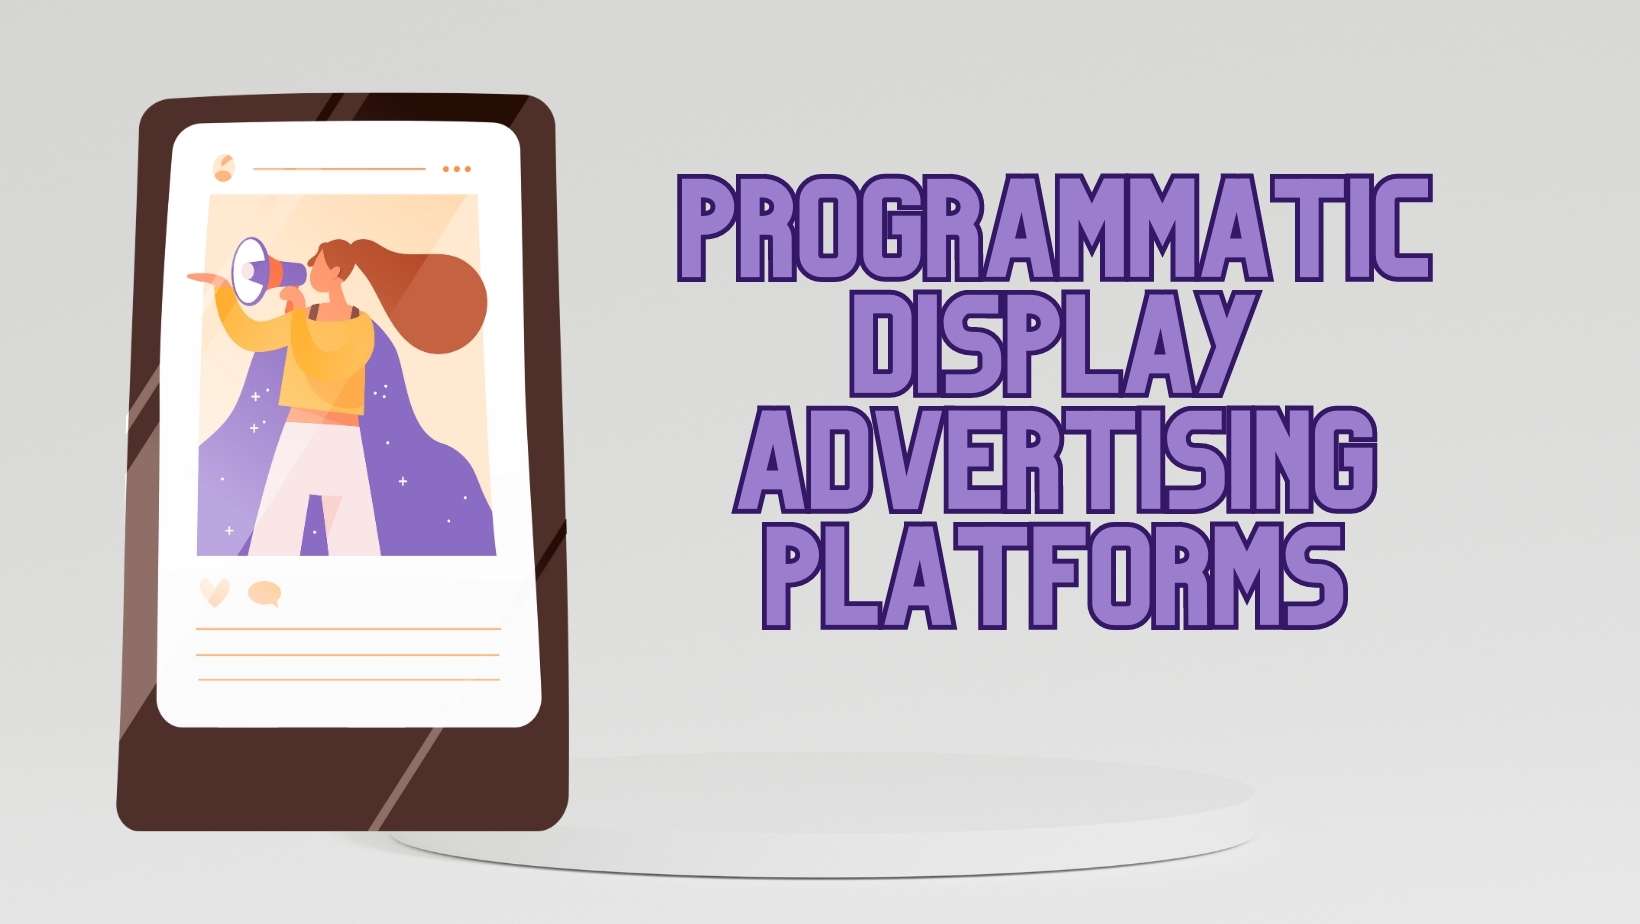 Programmatic display advertising platforms (1)-min